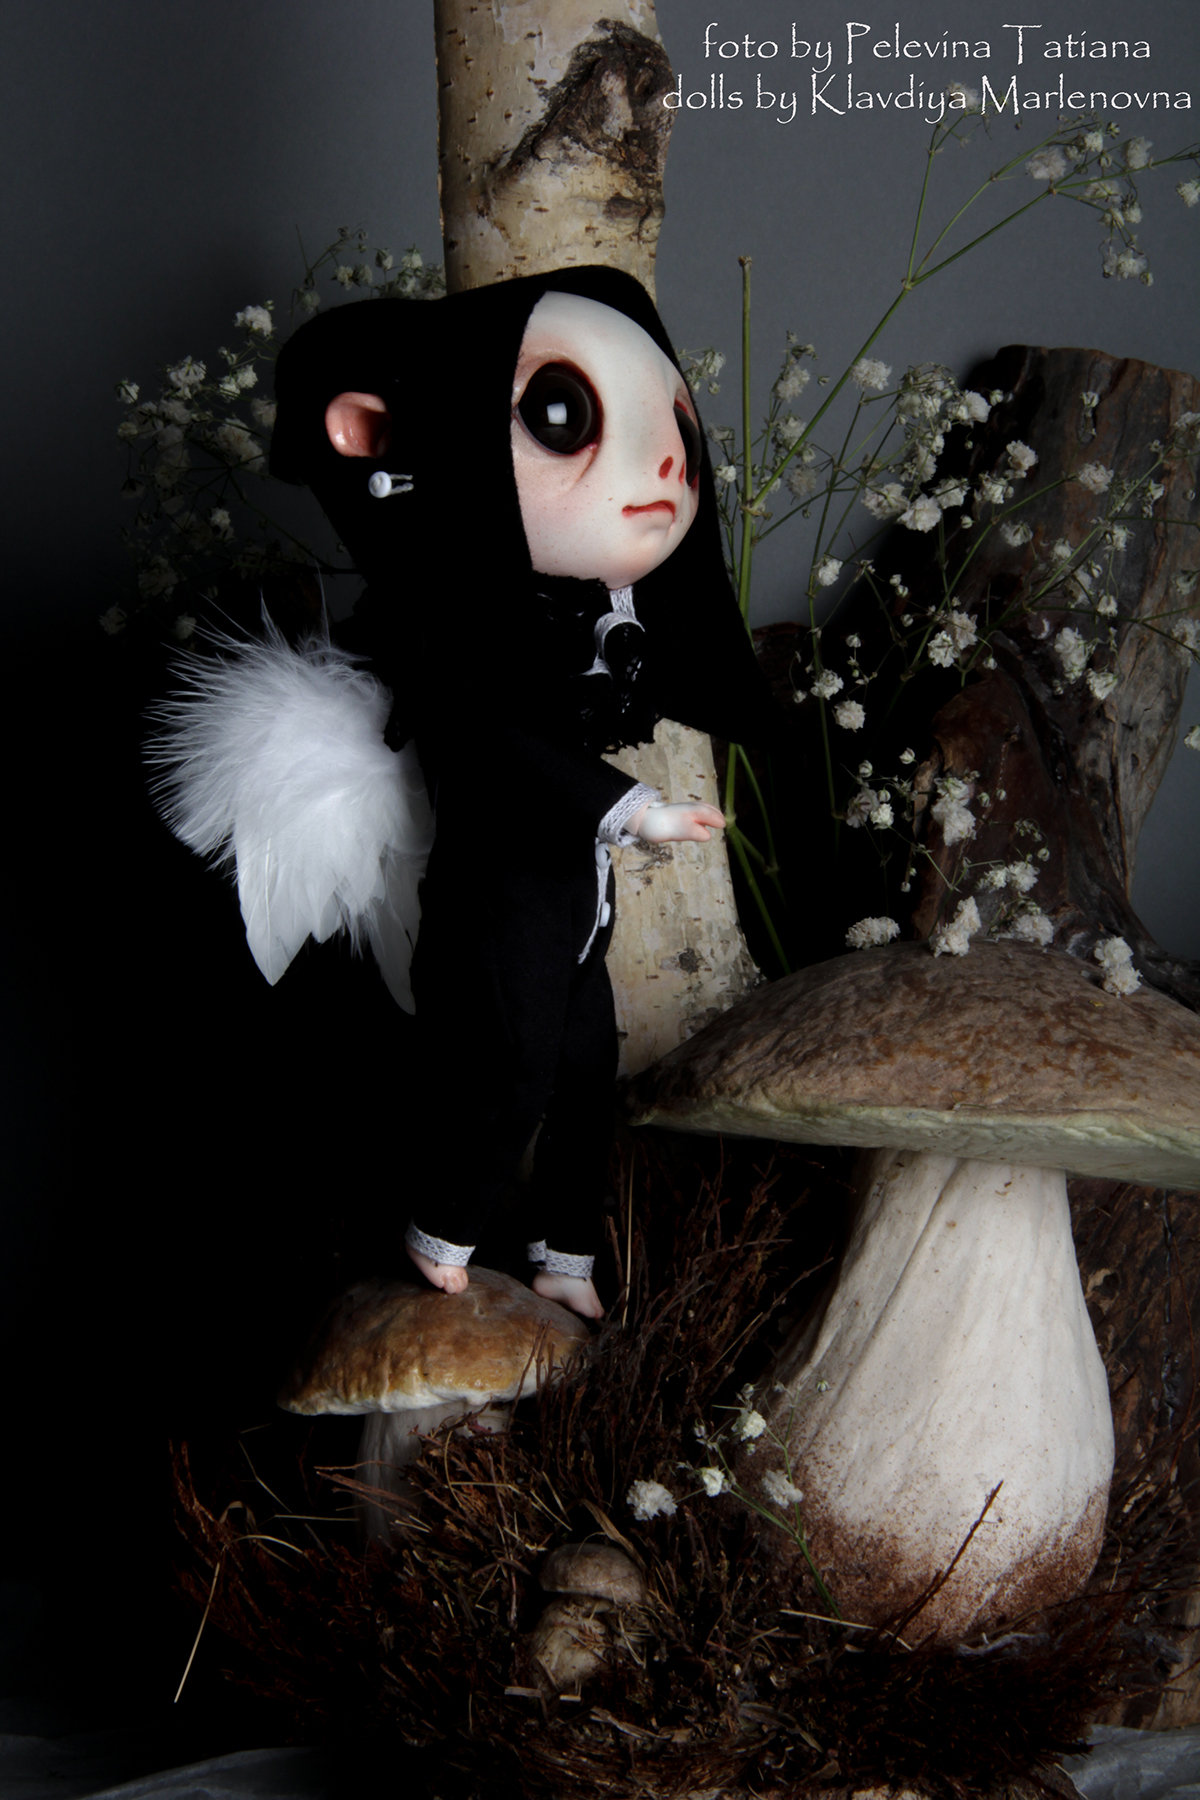 angel bjd death doll dolls polyurethane resin ANGELOFDEATH balljointeddoll beast hare handmade rabbit bunny cute